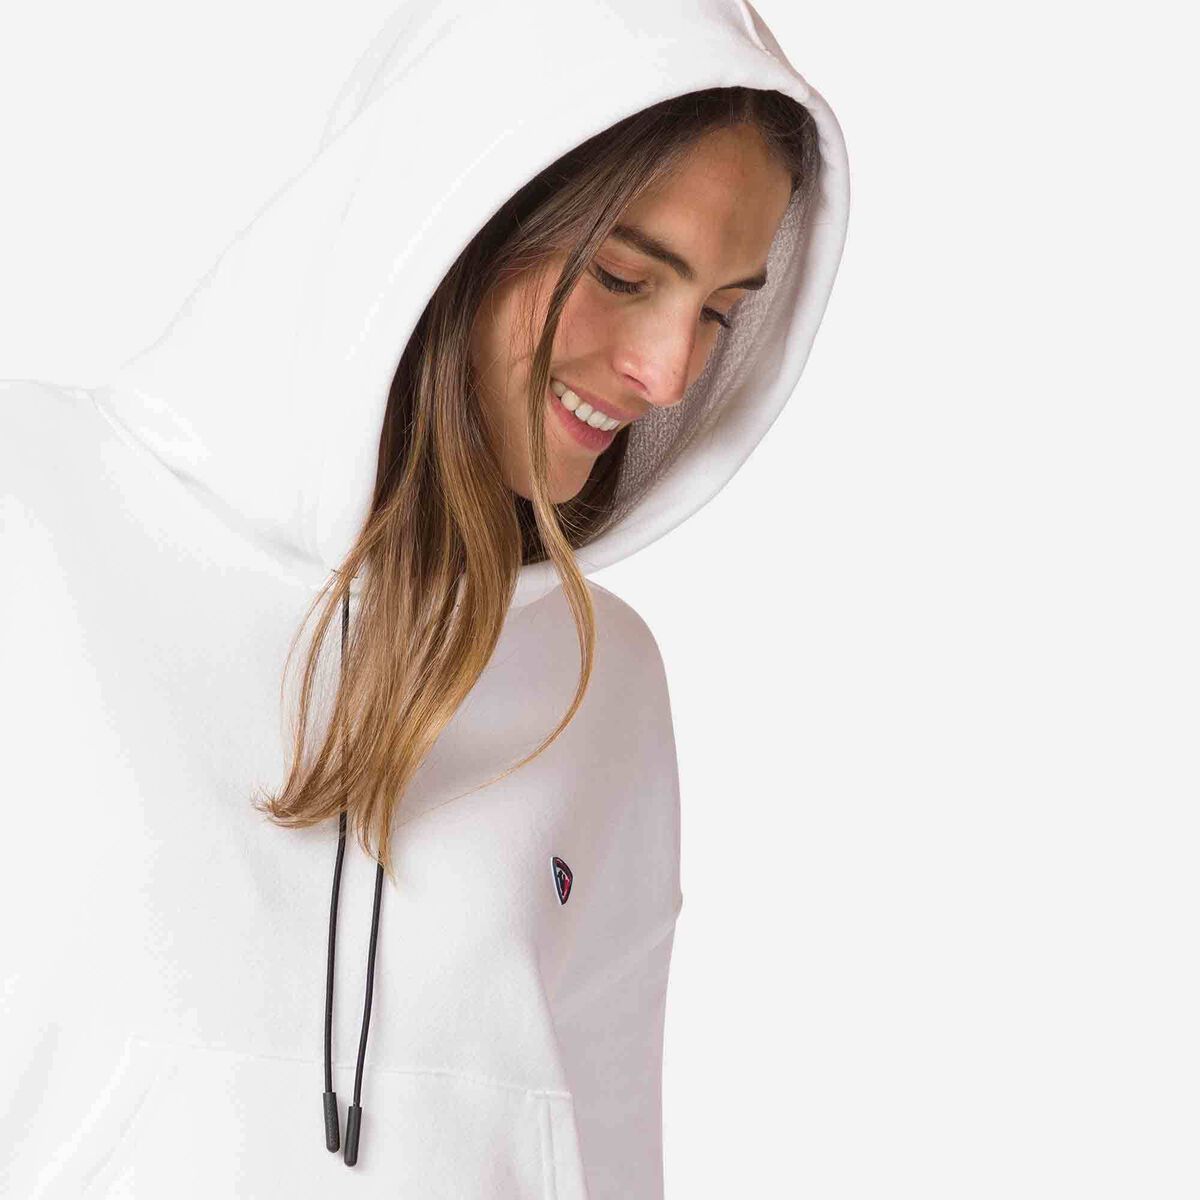 Rossignol Women's hooded sweatshirt white